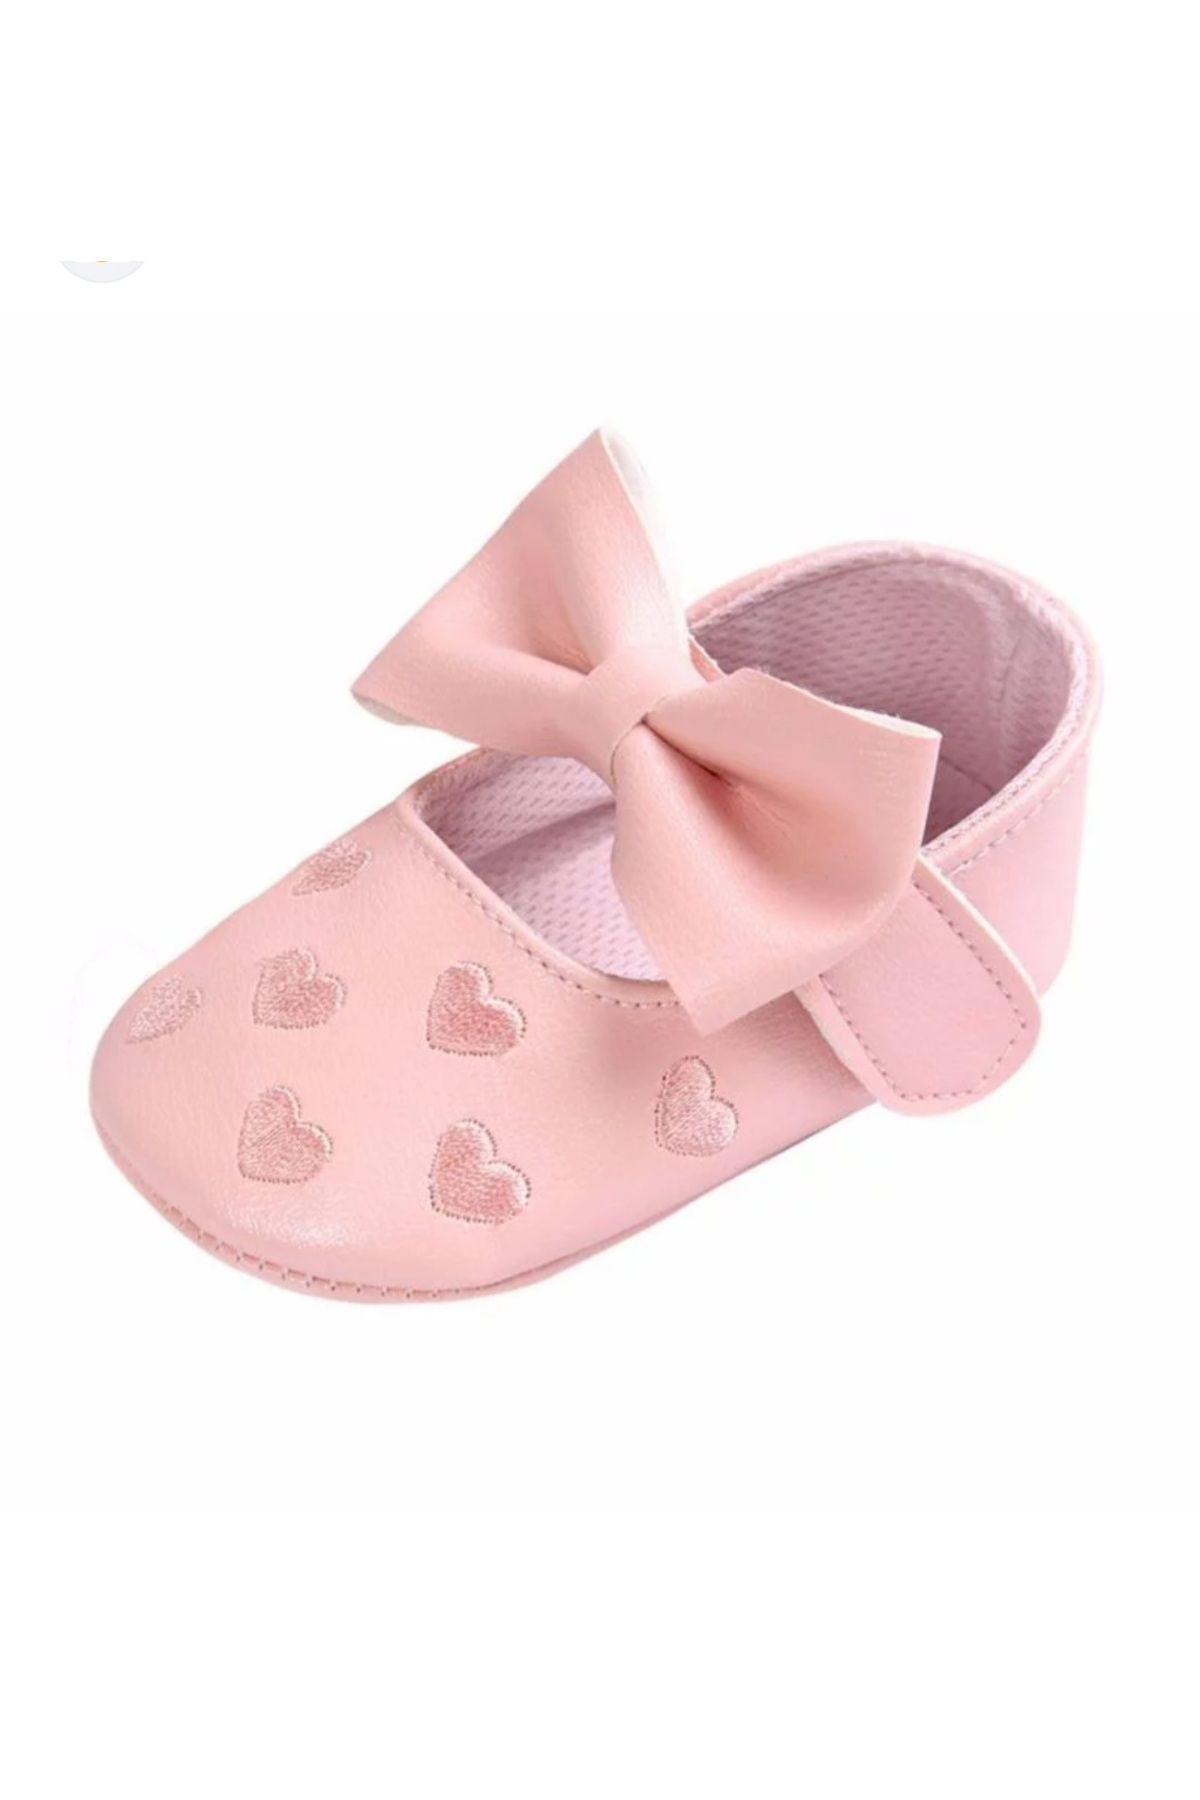 hira kids collection Kız Bebek Kalp Nakışlı Patik Ayakkabı